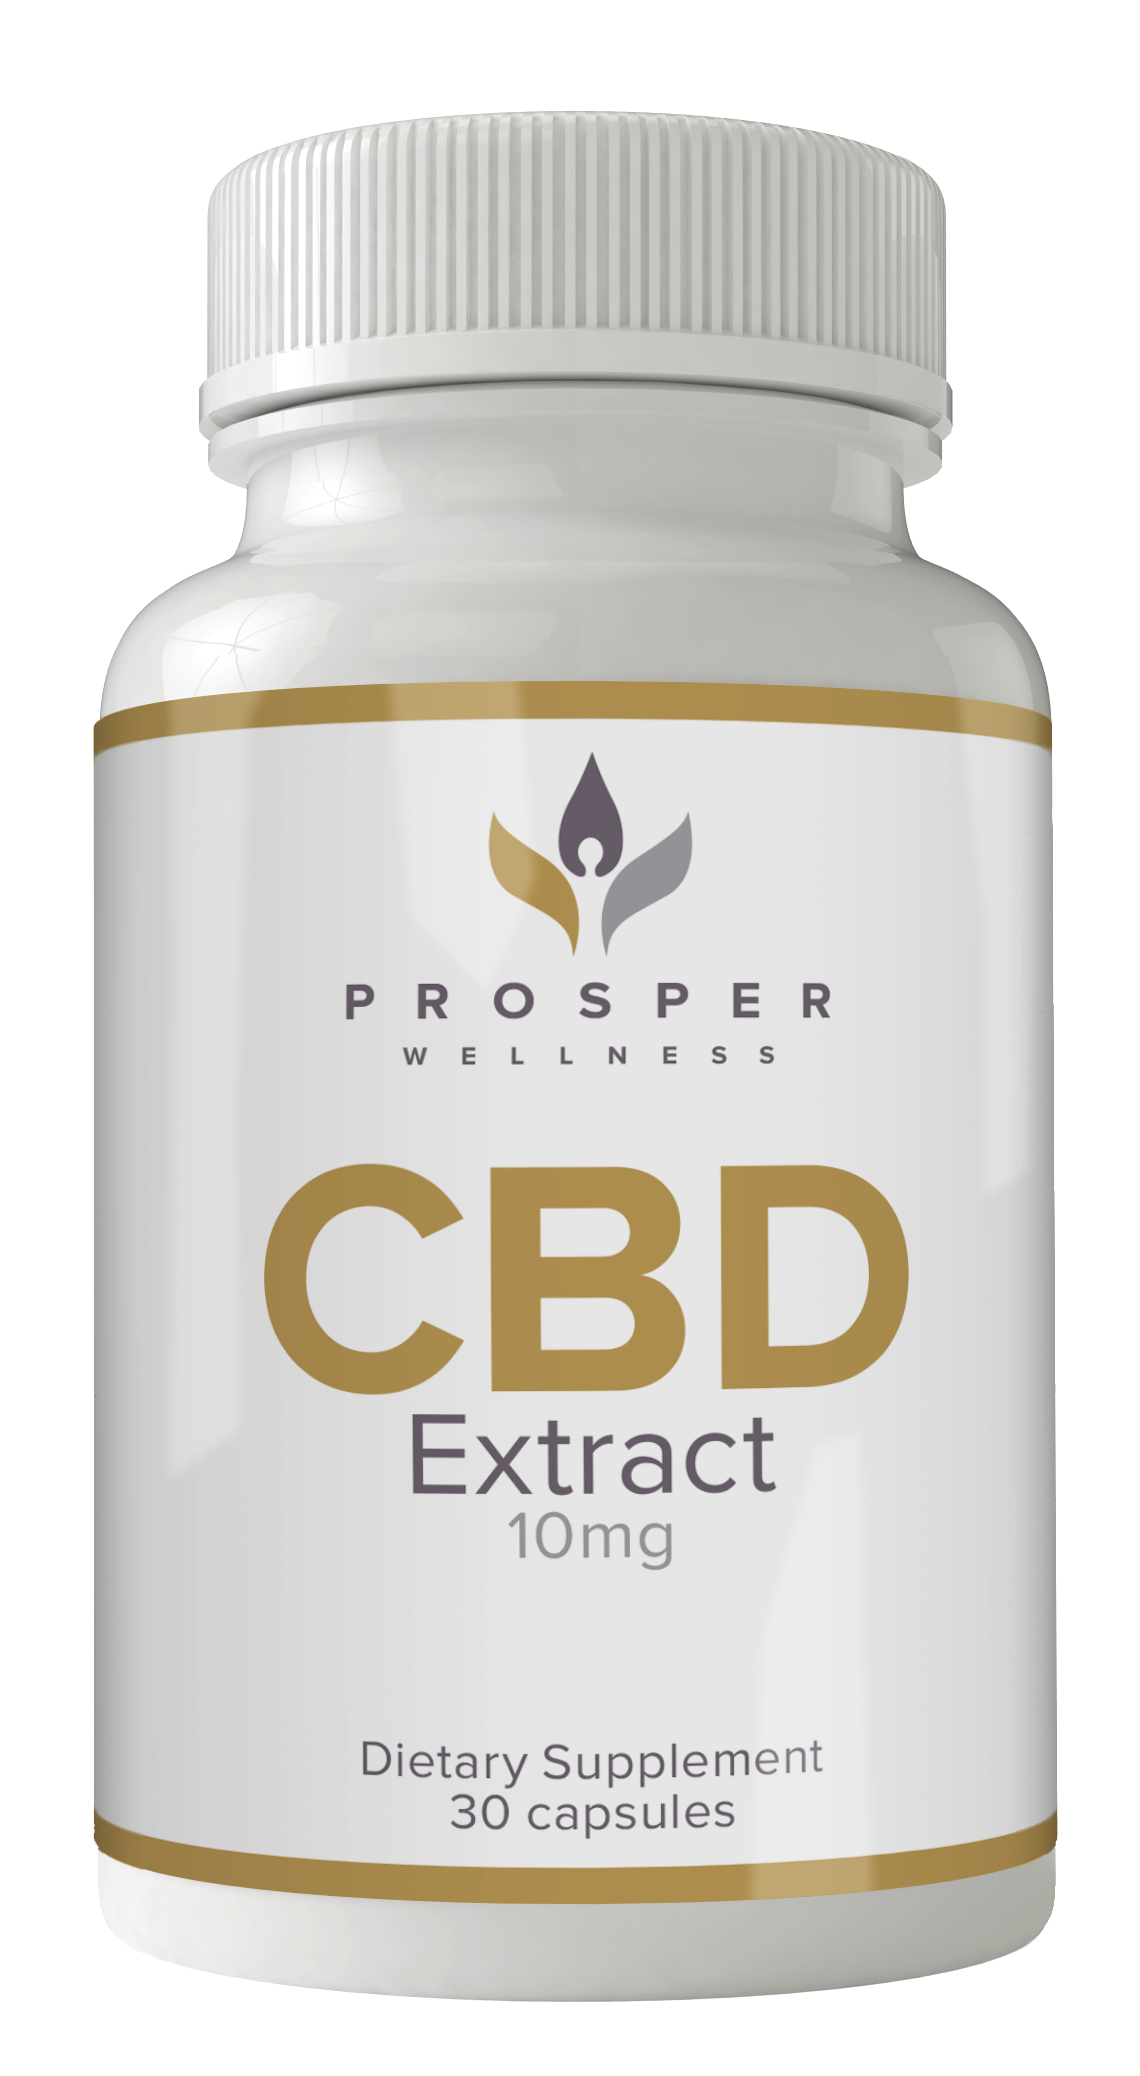 Prosper Wellness CBD Extract